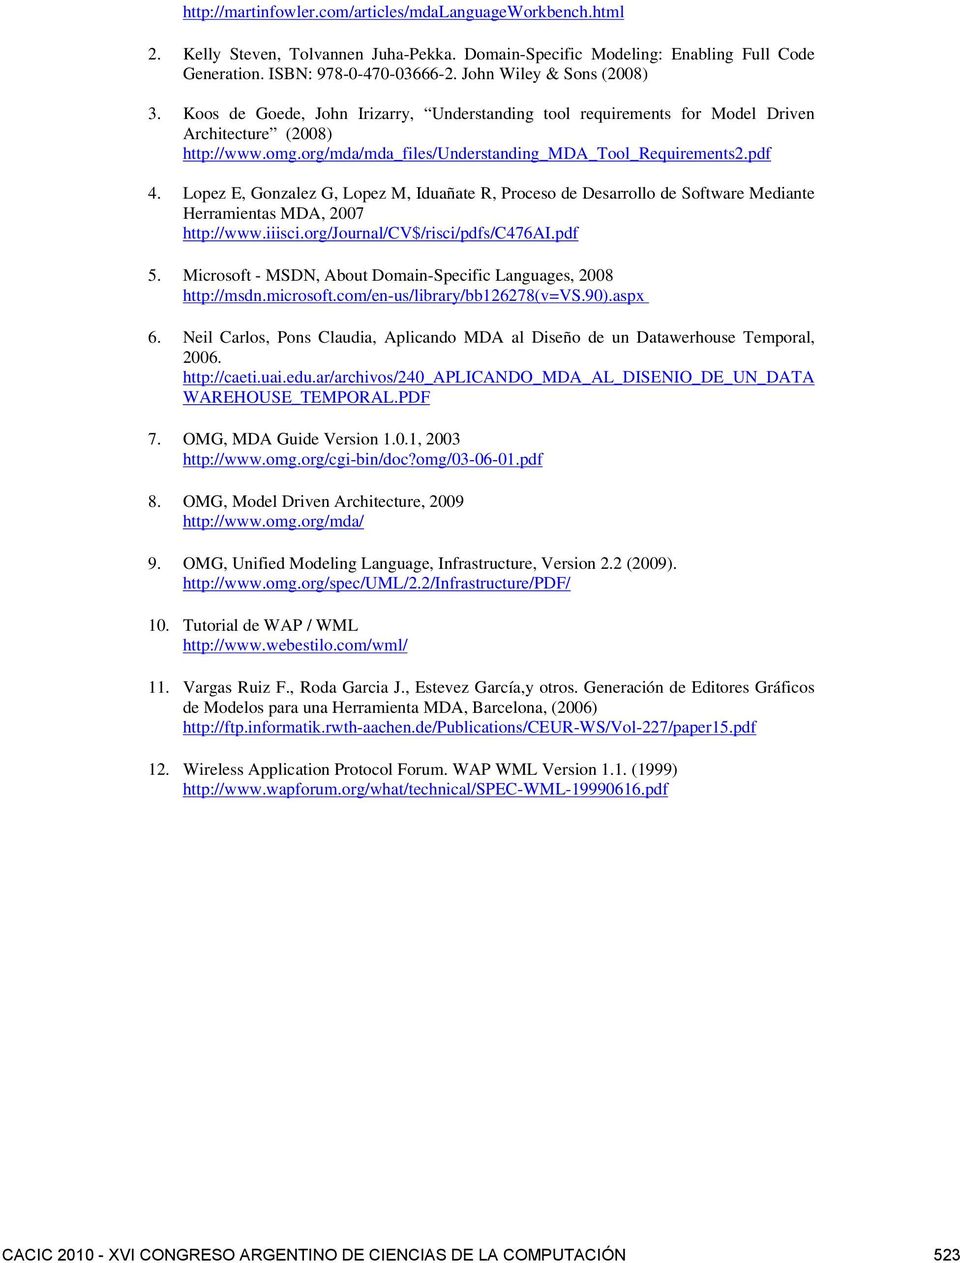 pdf 4. Lopez E, Gonzalez G, Lopez M, Iduañate R, Proceso de Desarrollo de Software Mediante Herramientas MDA, 2007 http://www.iiisci.org/journal/cv$/risci/pdfs/c476ai.pdf 5.